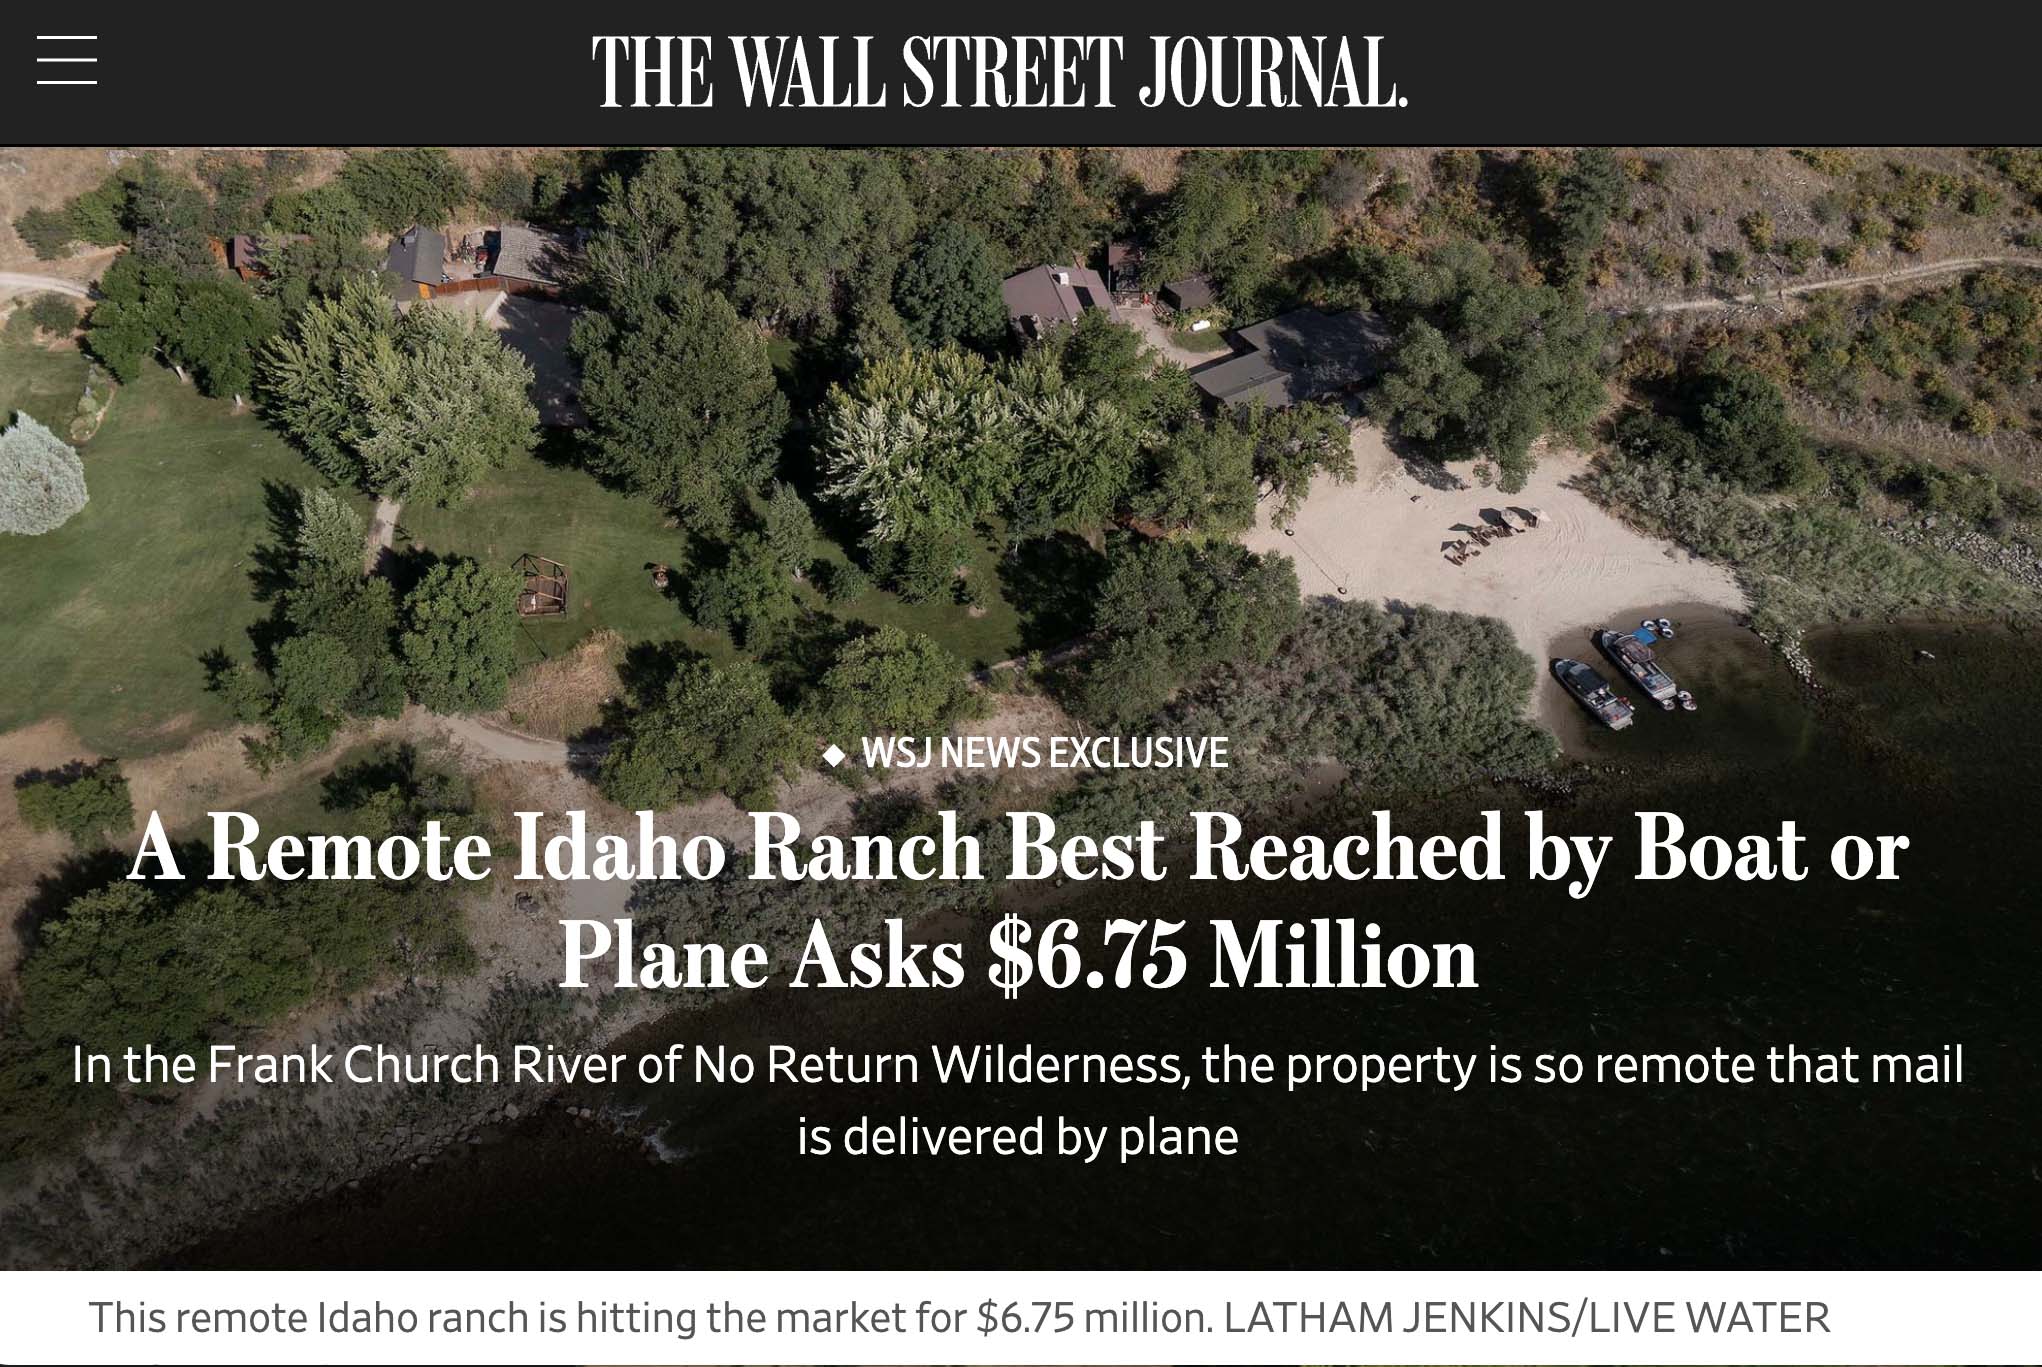 Wall Street Journal - Mackay Bar Ranch, Salmon River, Idaho